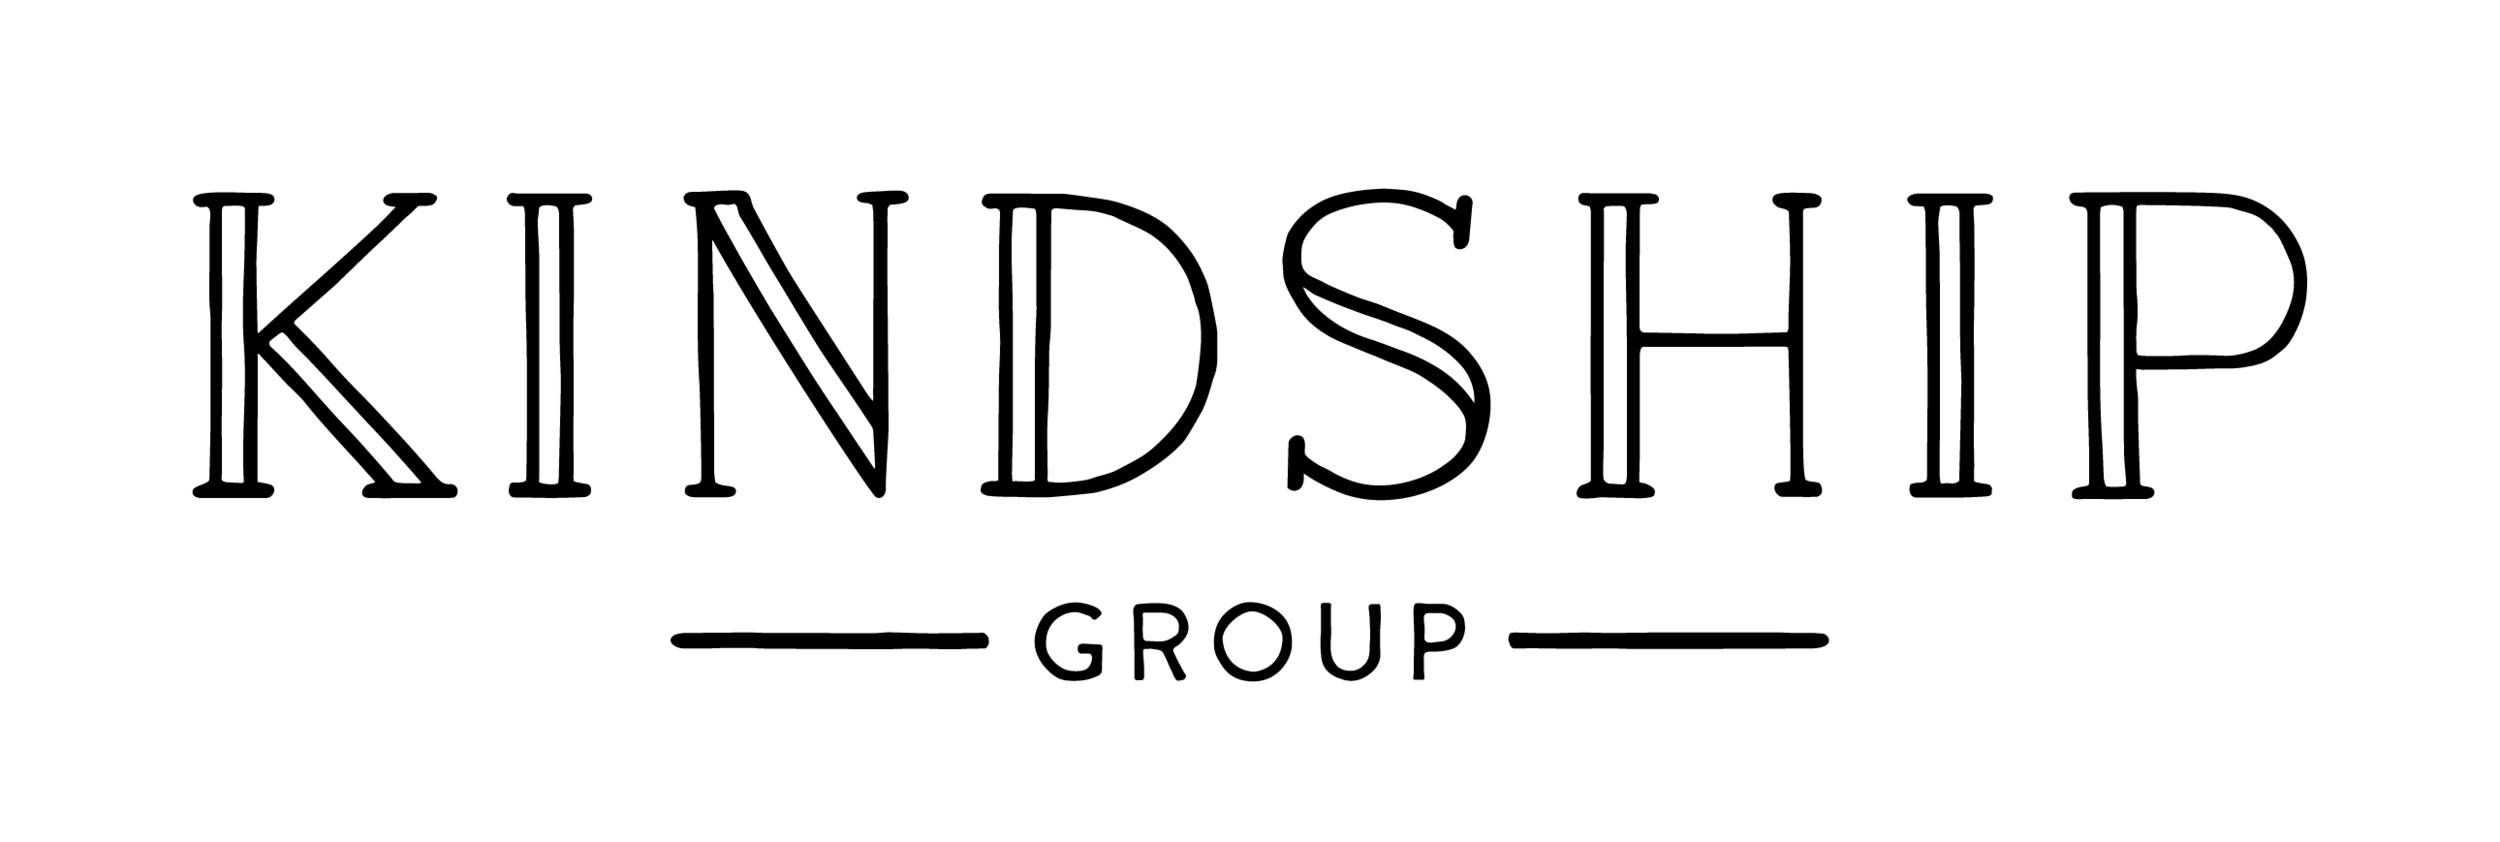 KindshipGroup-Logo-Horizontal-Black-LG.png